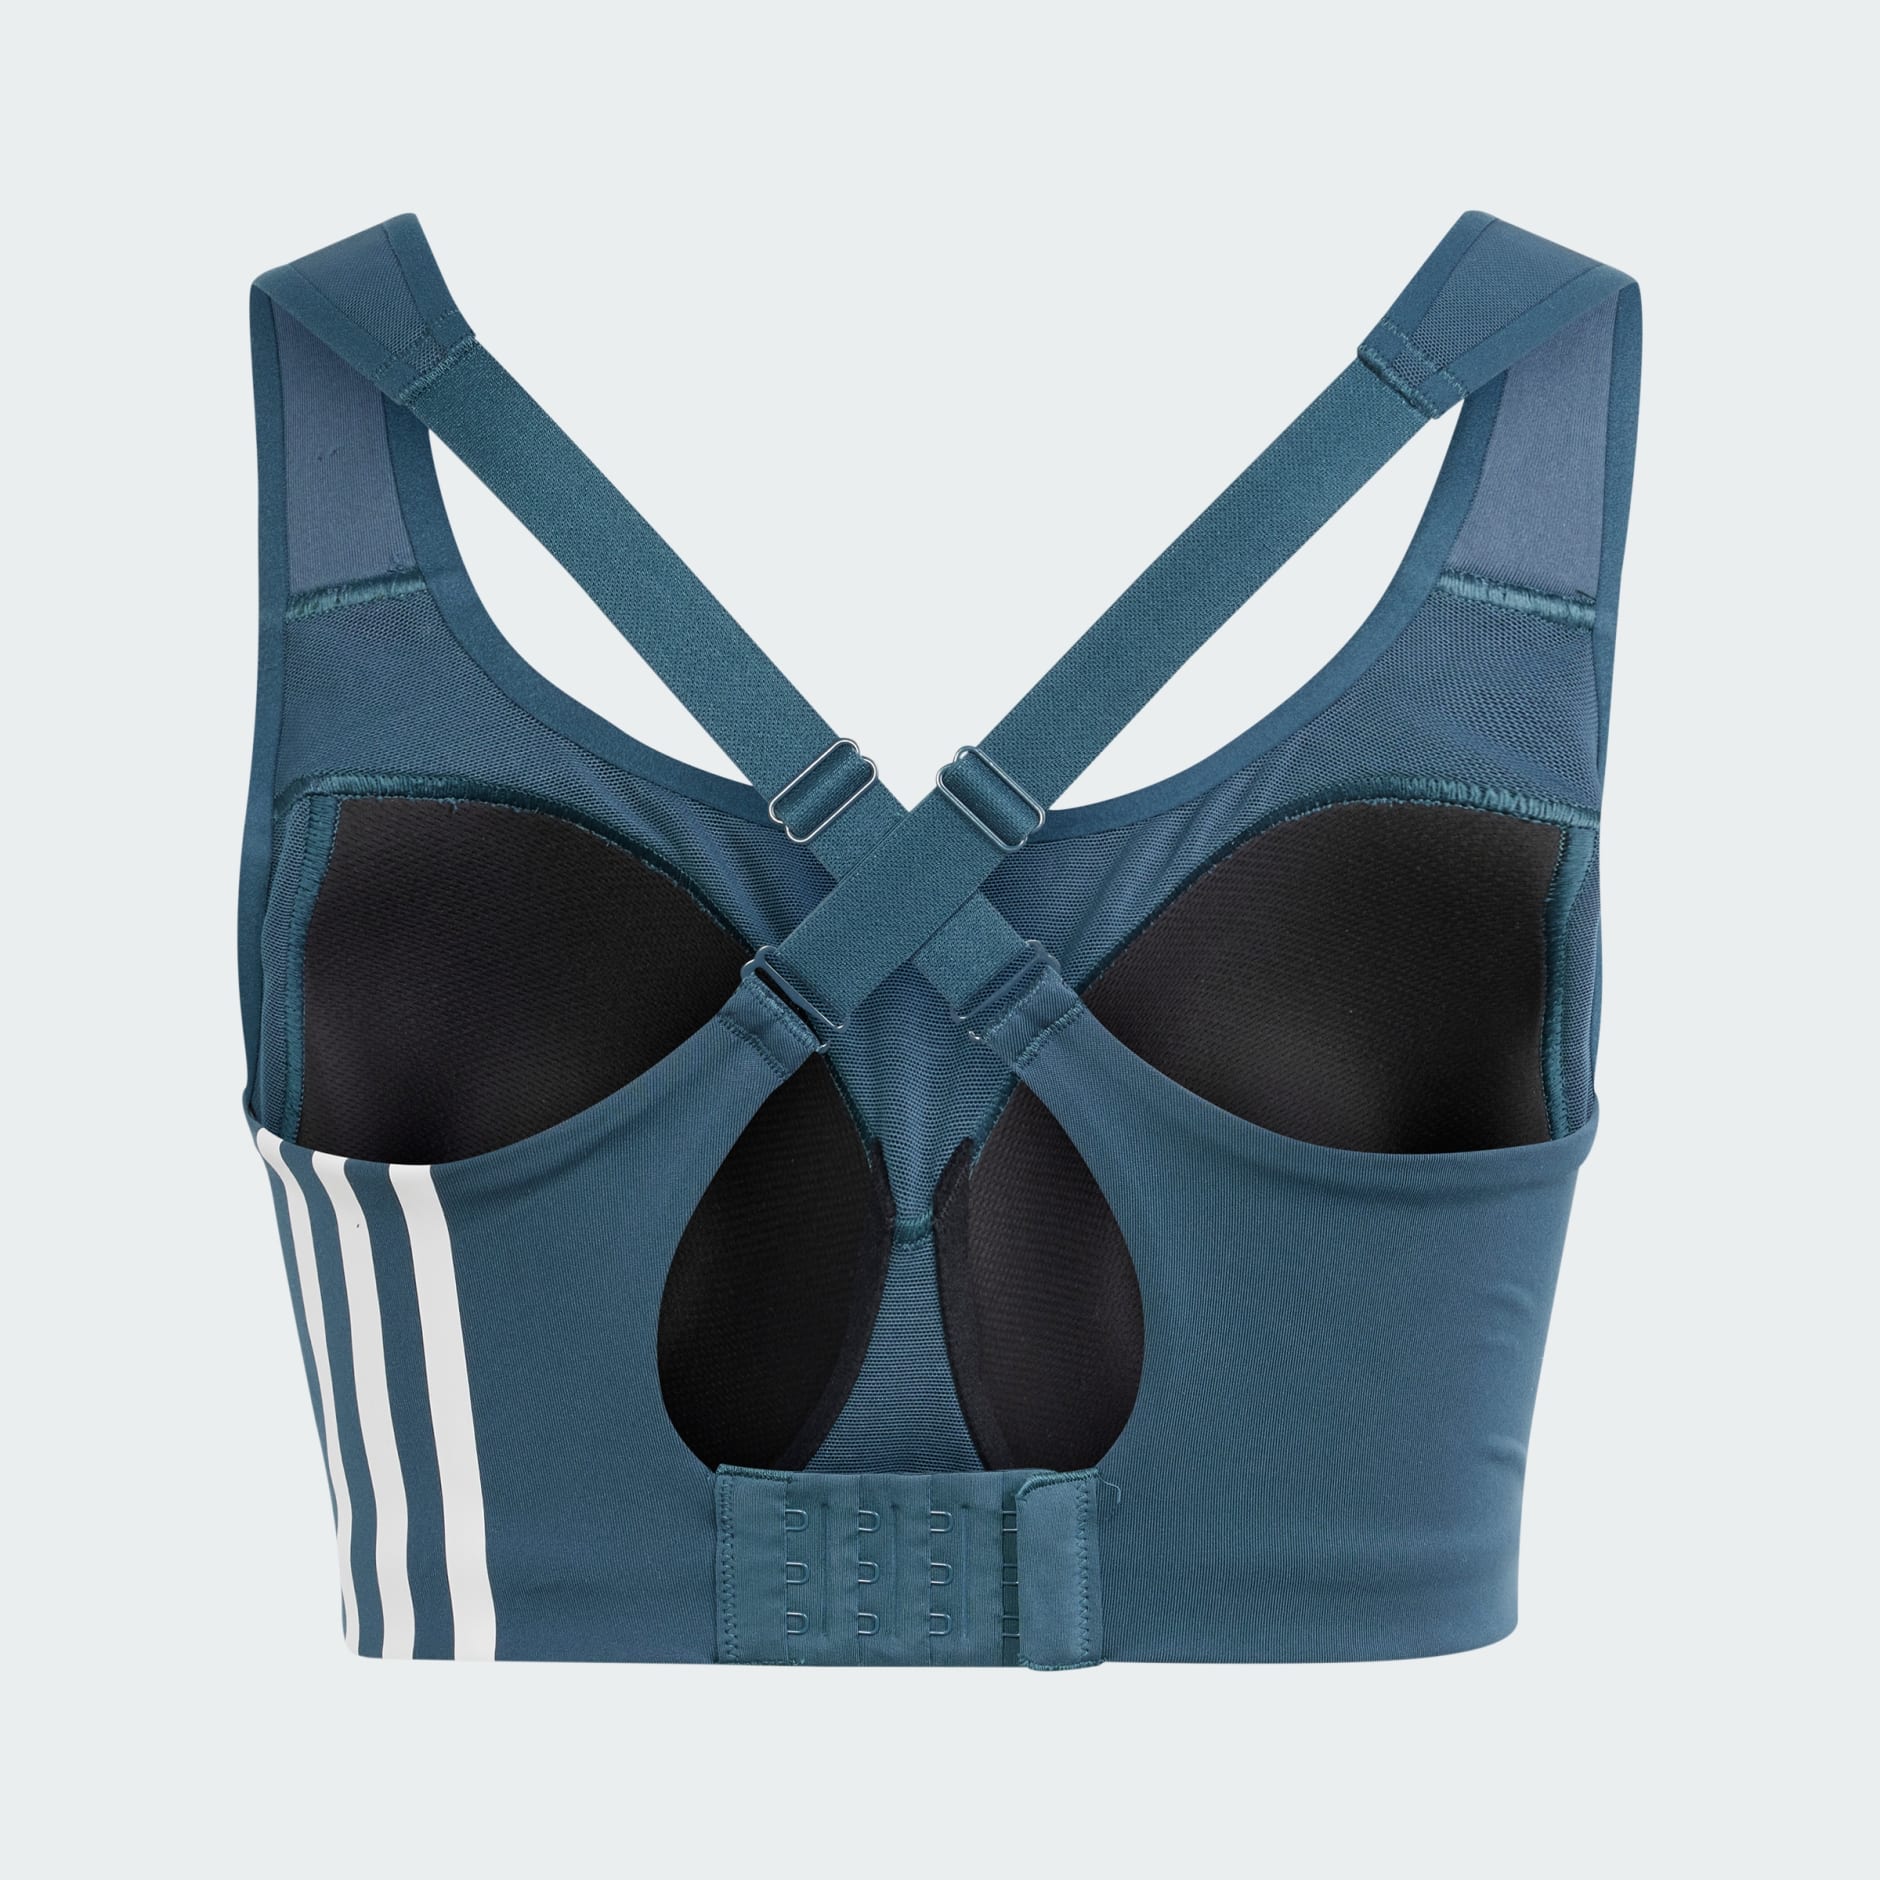 Adidas Tlrdim High Support - Sports bra Women's, Buy online